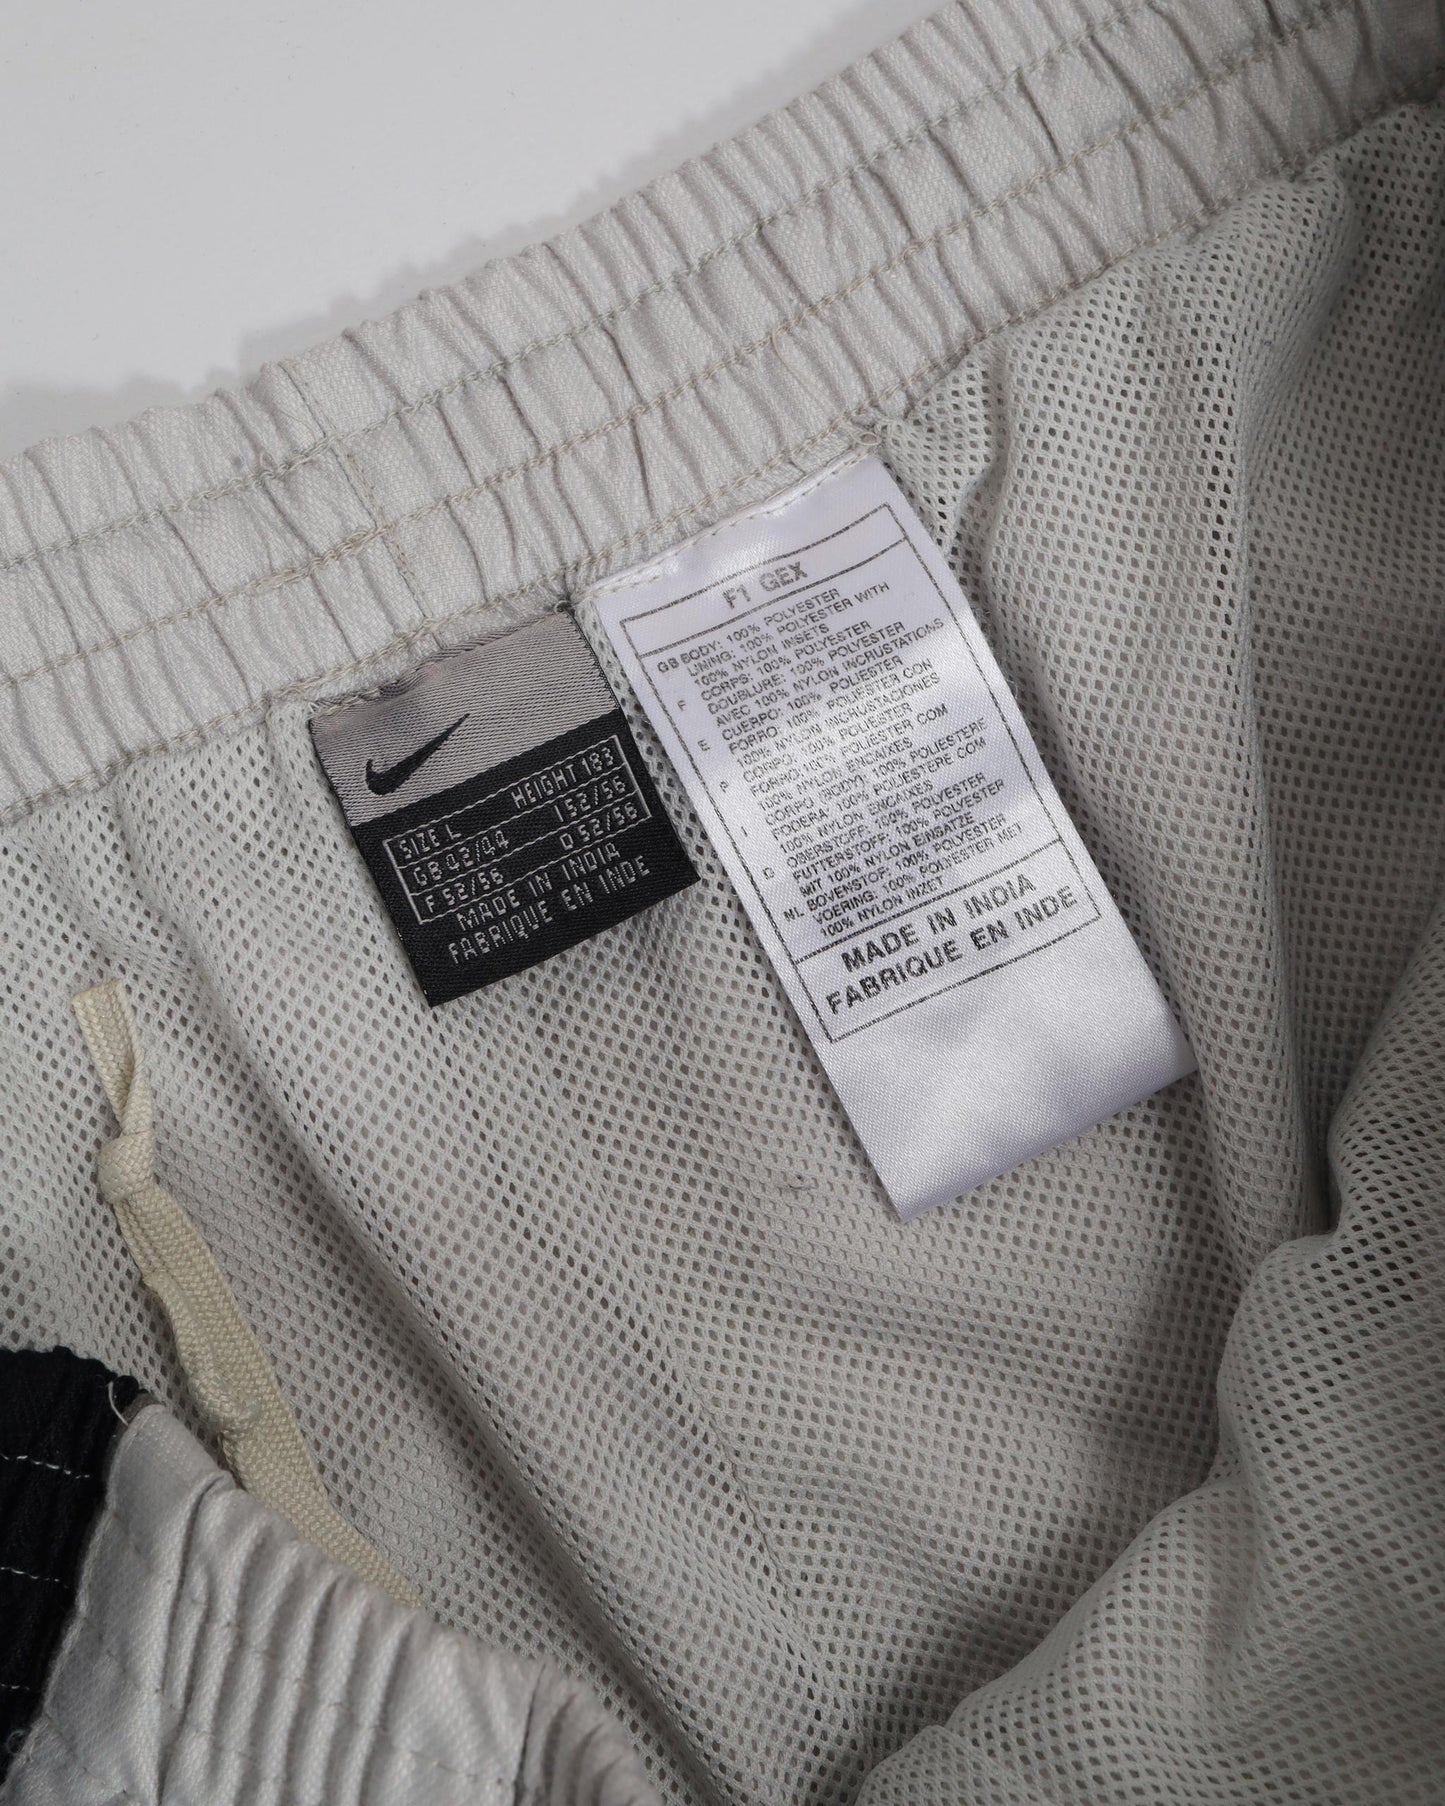 Pantaloni della tuta da paracadute Nike vintage